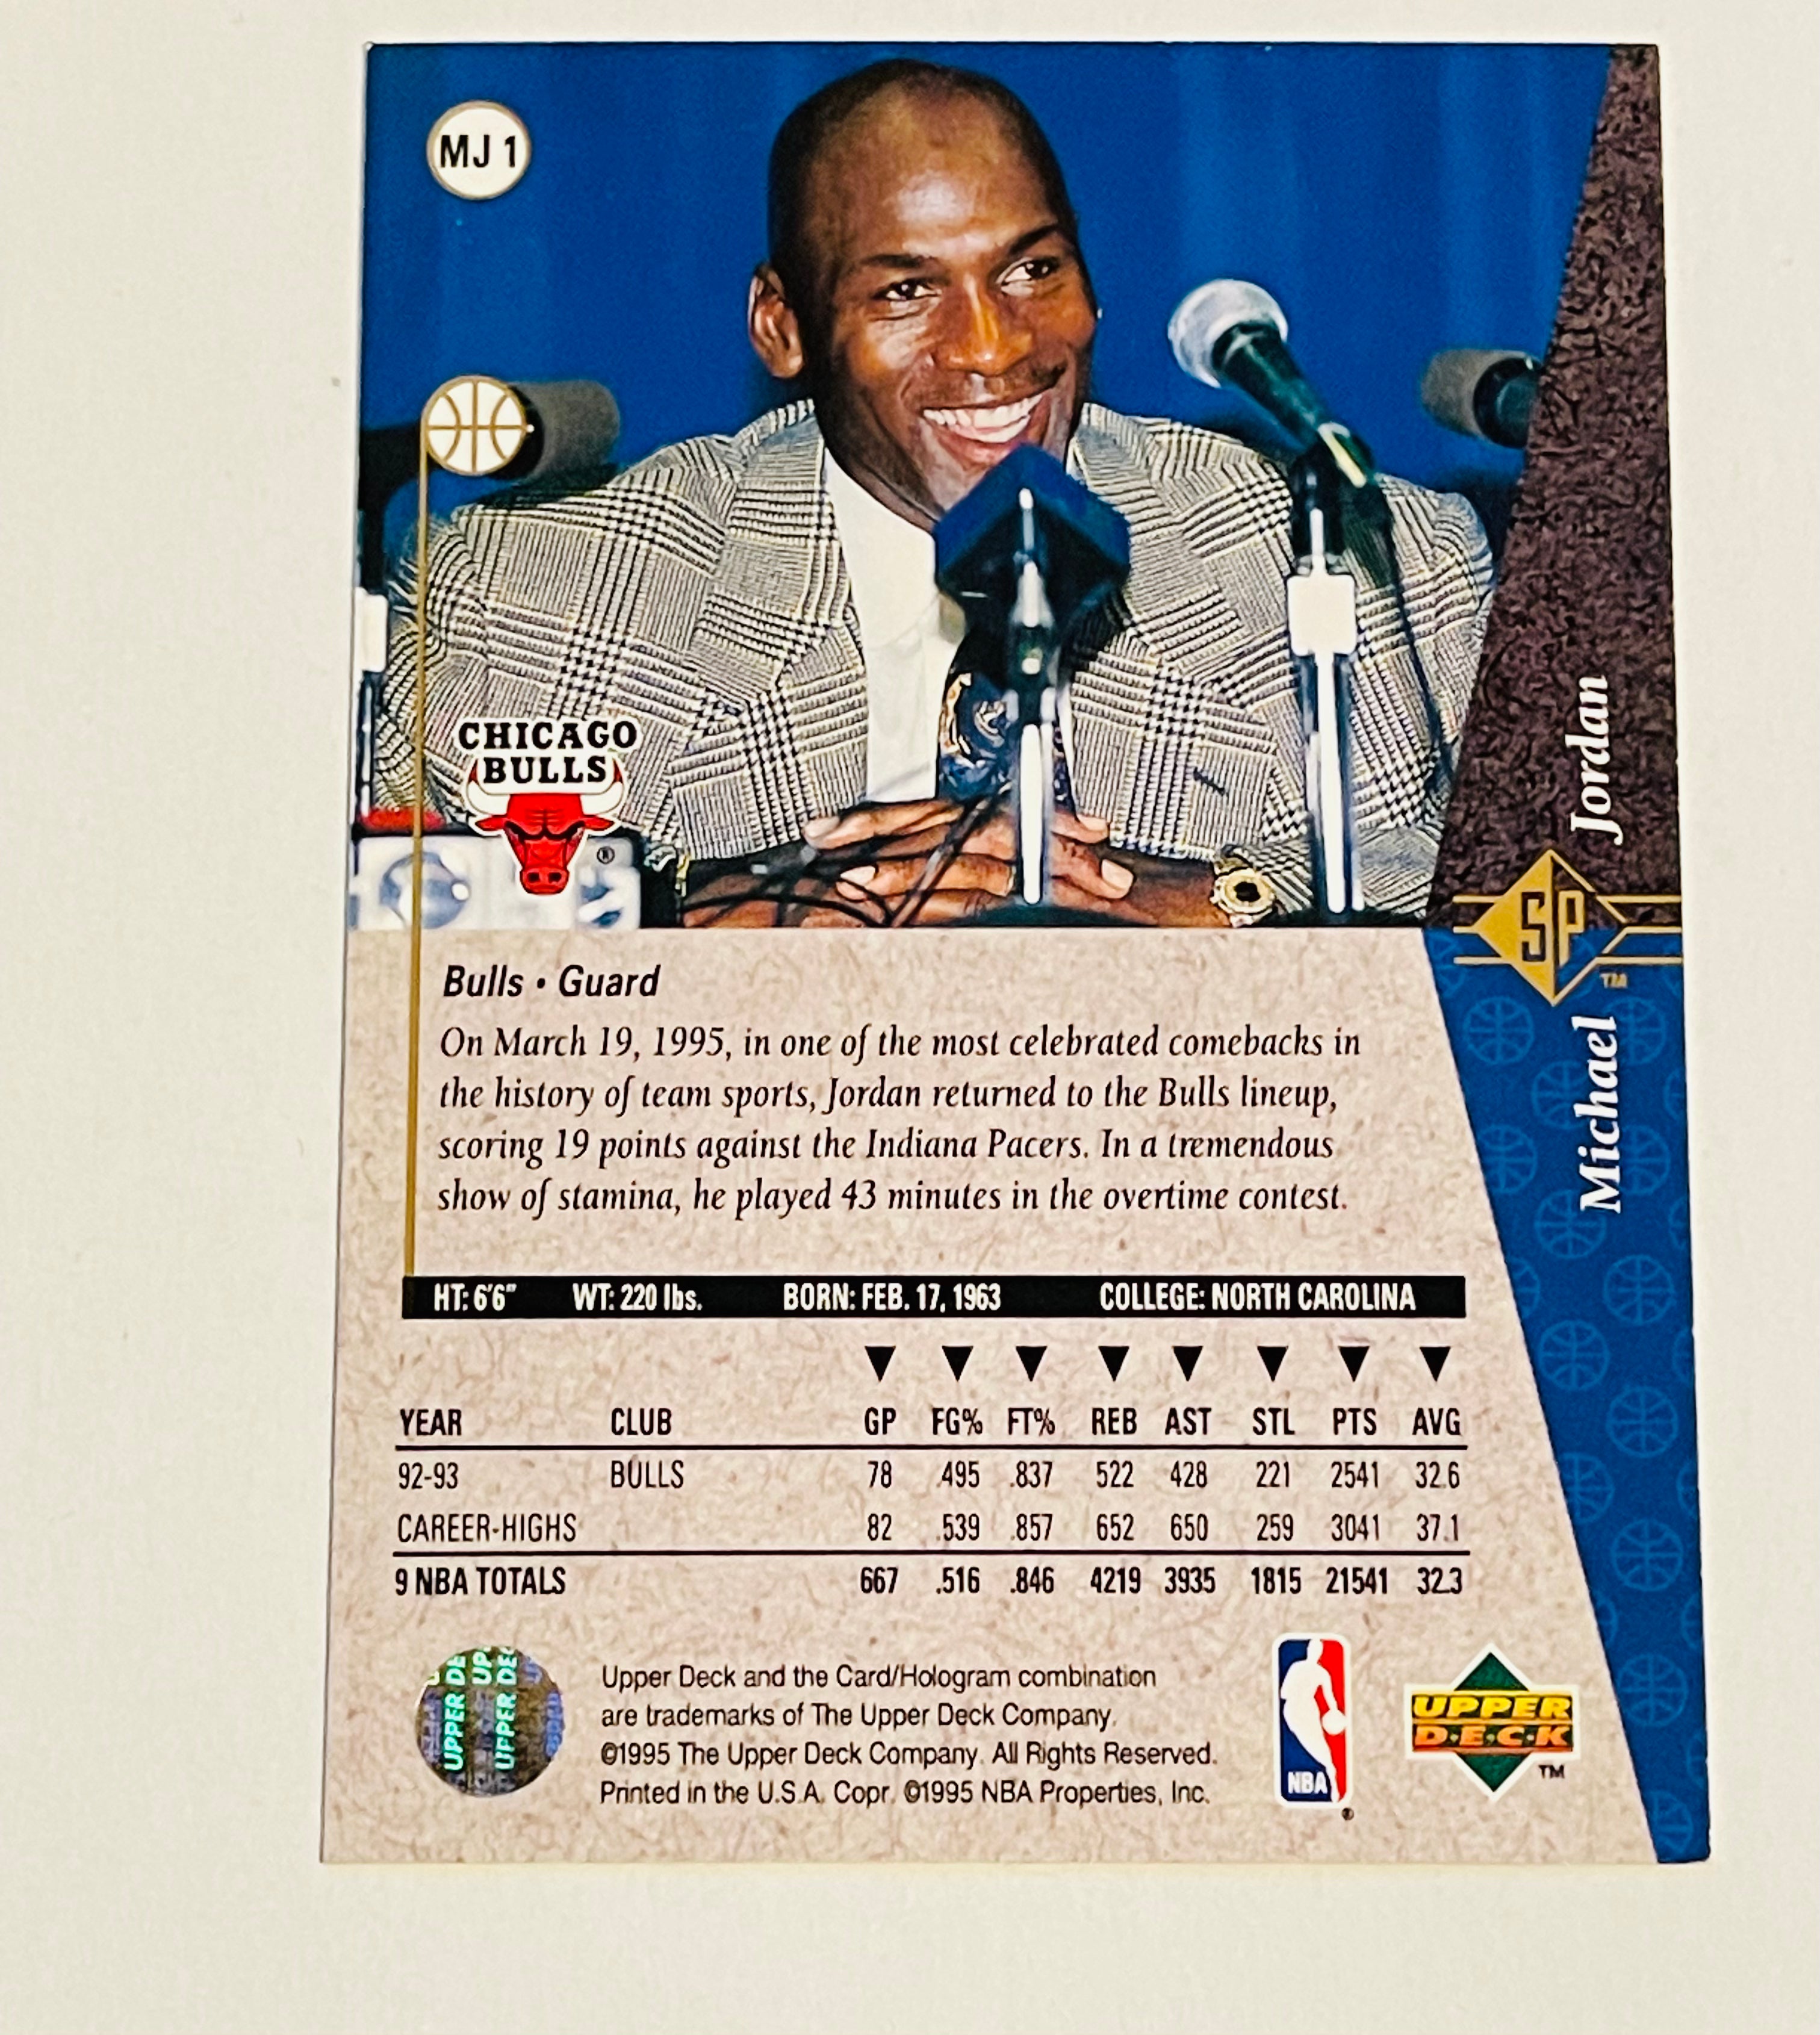 Michael Jordan Upperdeck SP MJ1 rare promo card 1995